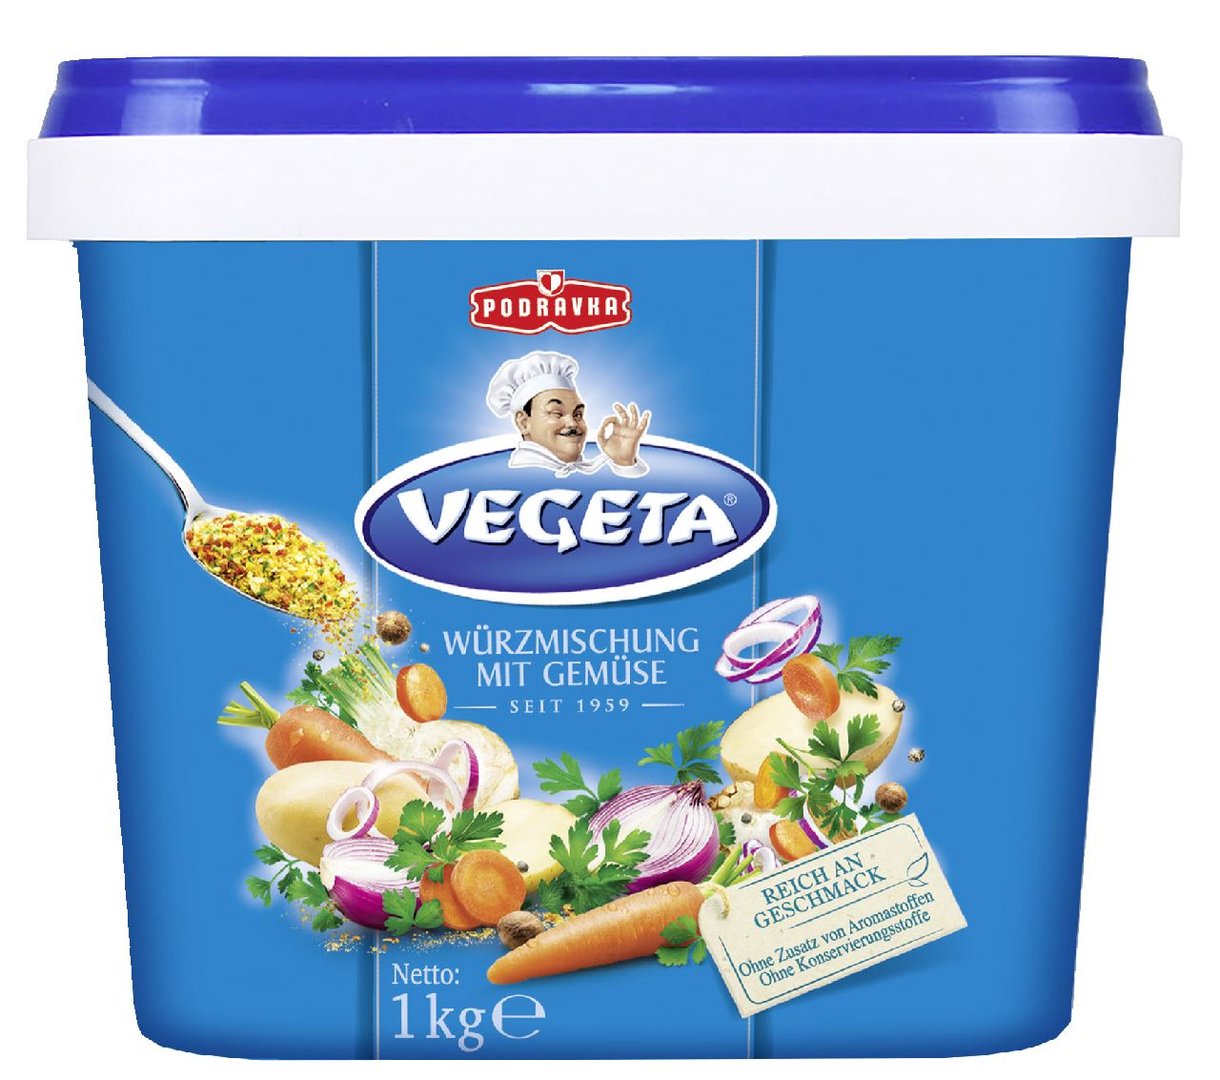 Podravka Vegeta - Würzmischung - 6 x 1,00 kg Dosen